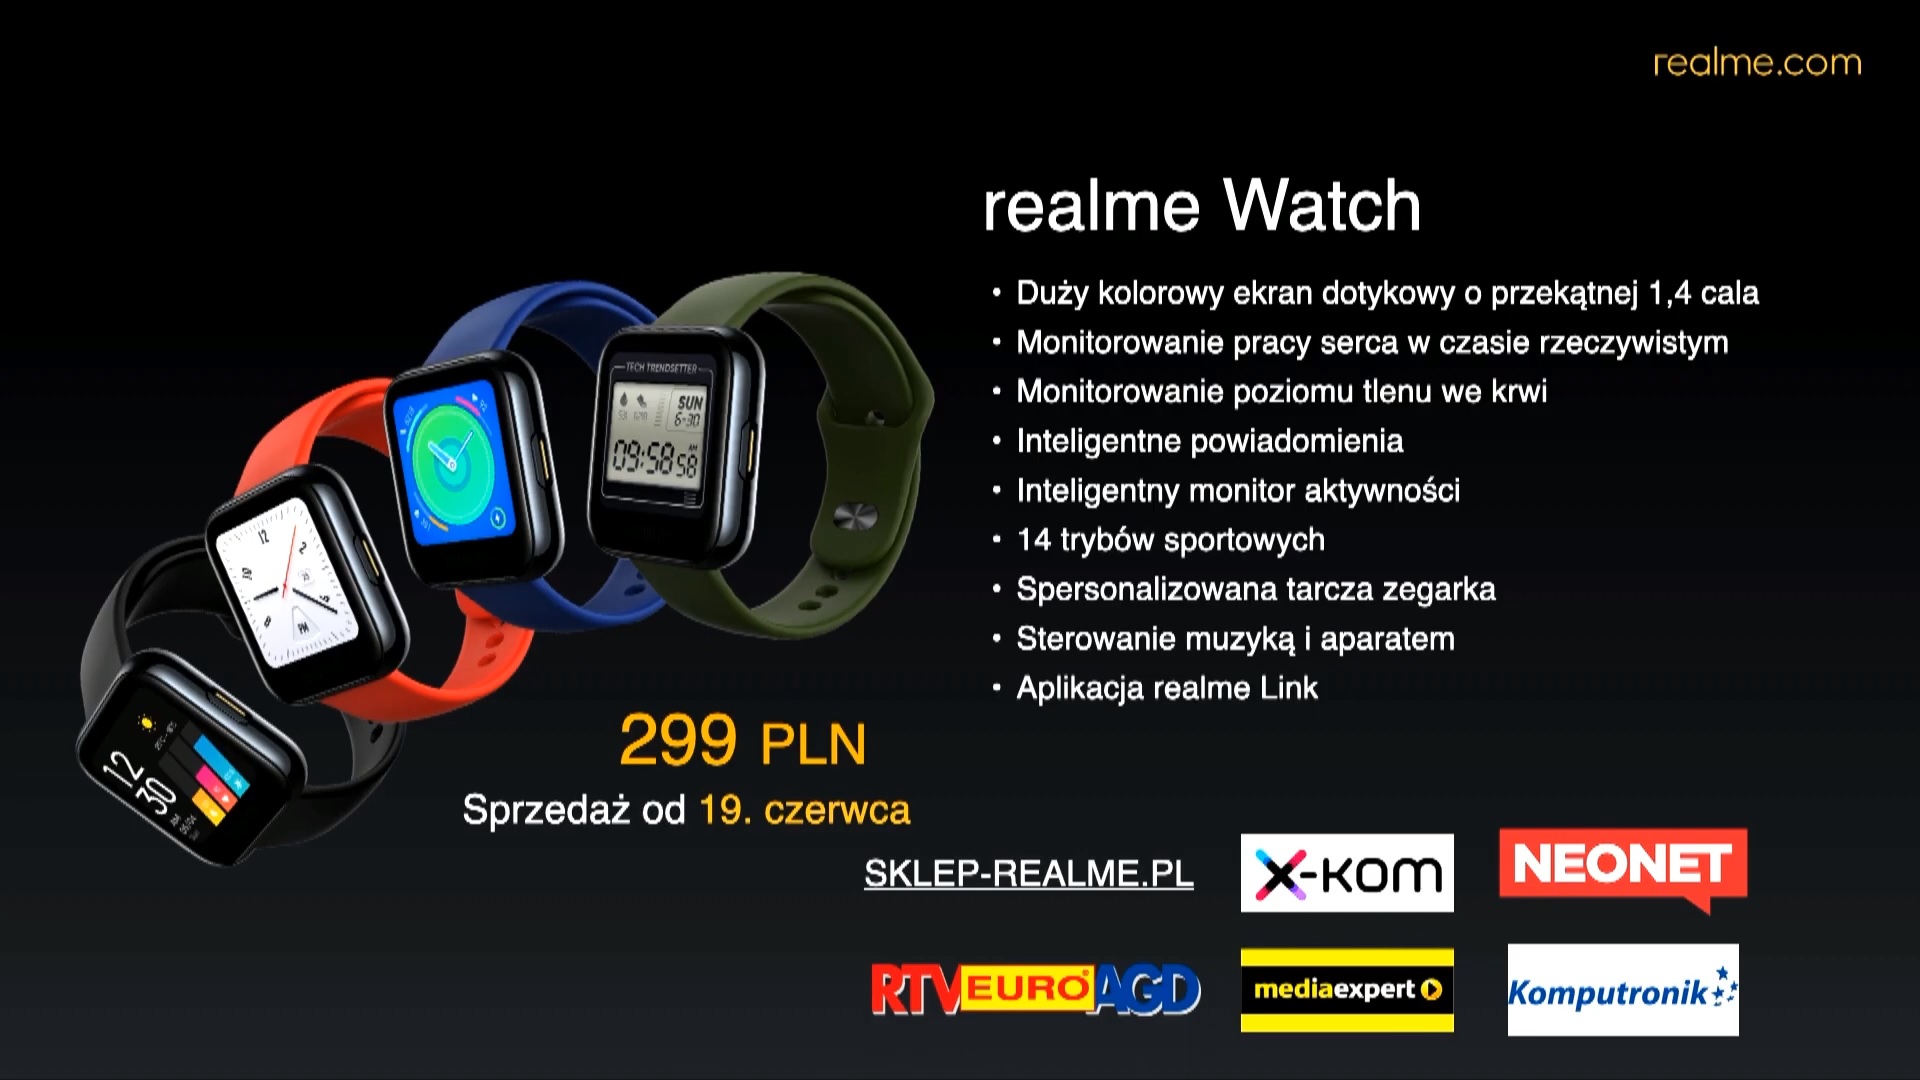 realme Watch price Poland